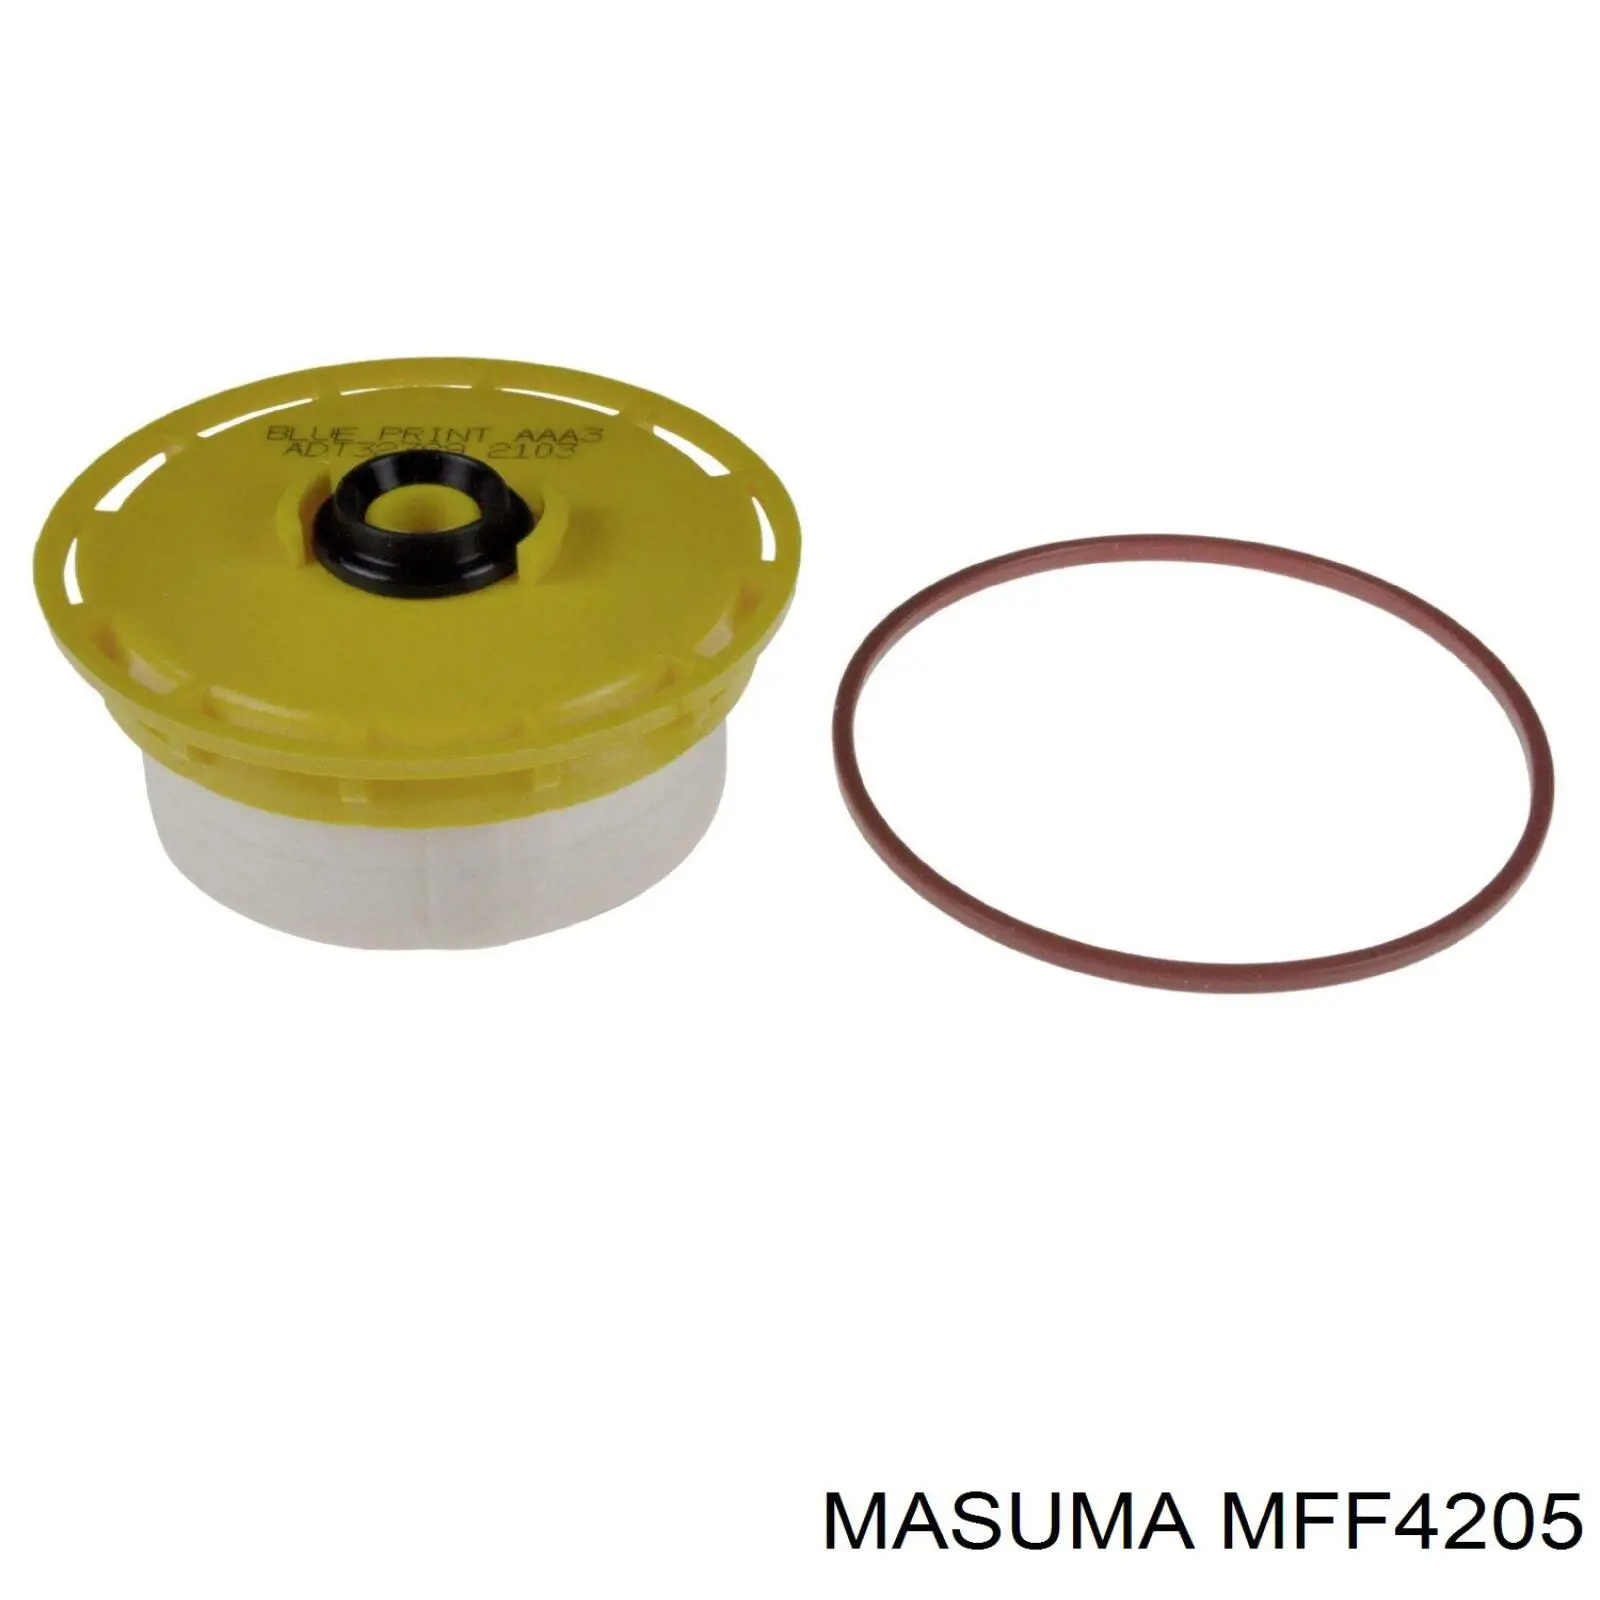 MFF4205 Masuma filtro combustible